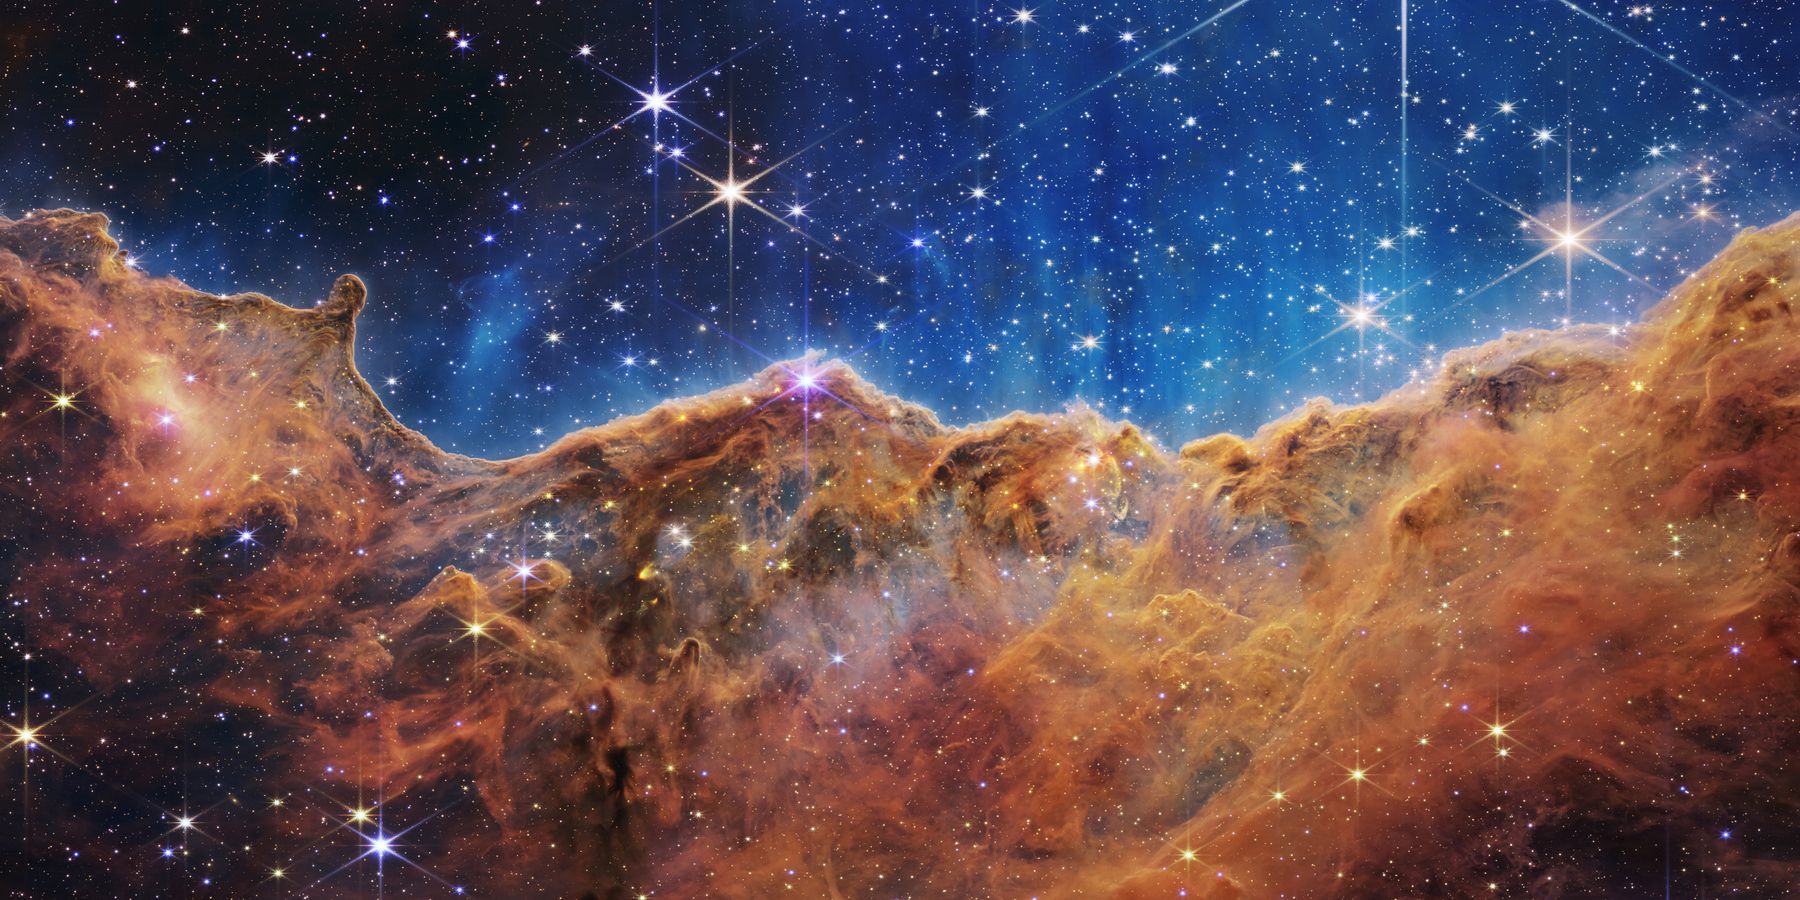 Stellar nursery in Carina nebula